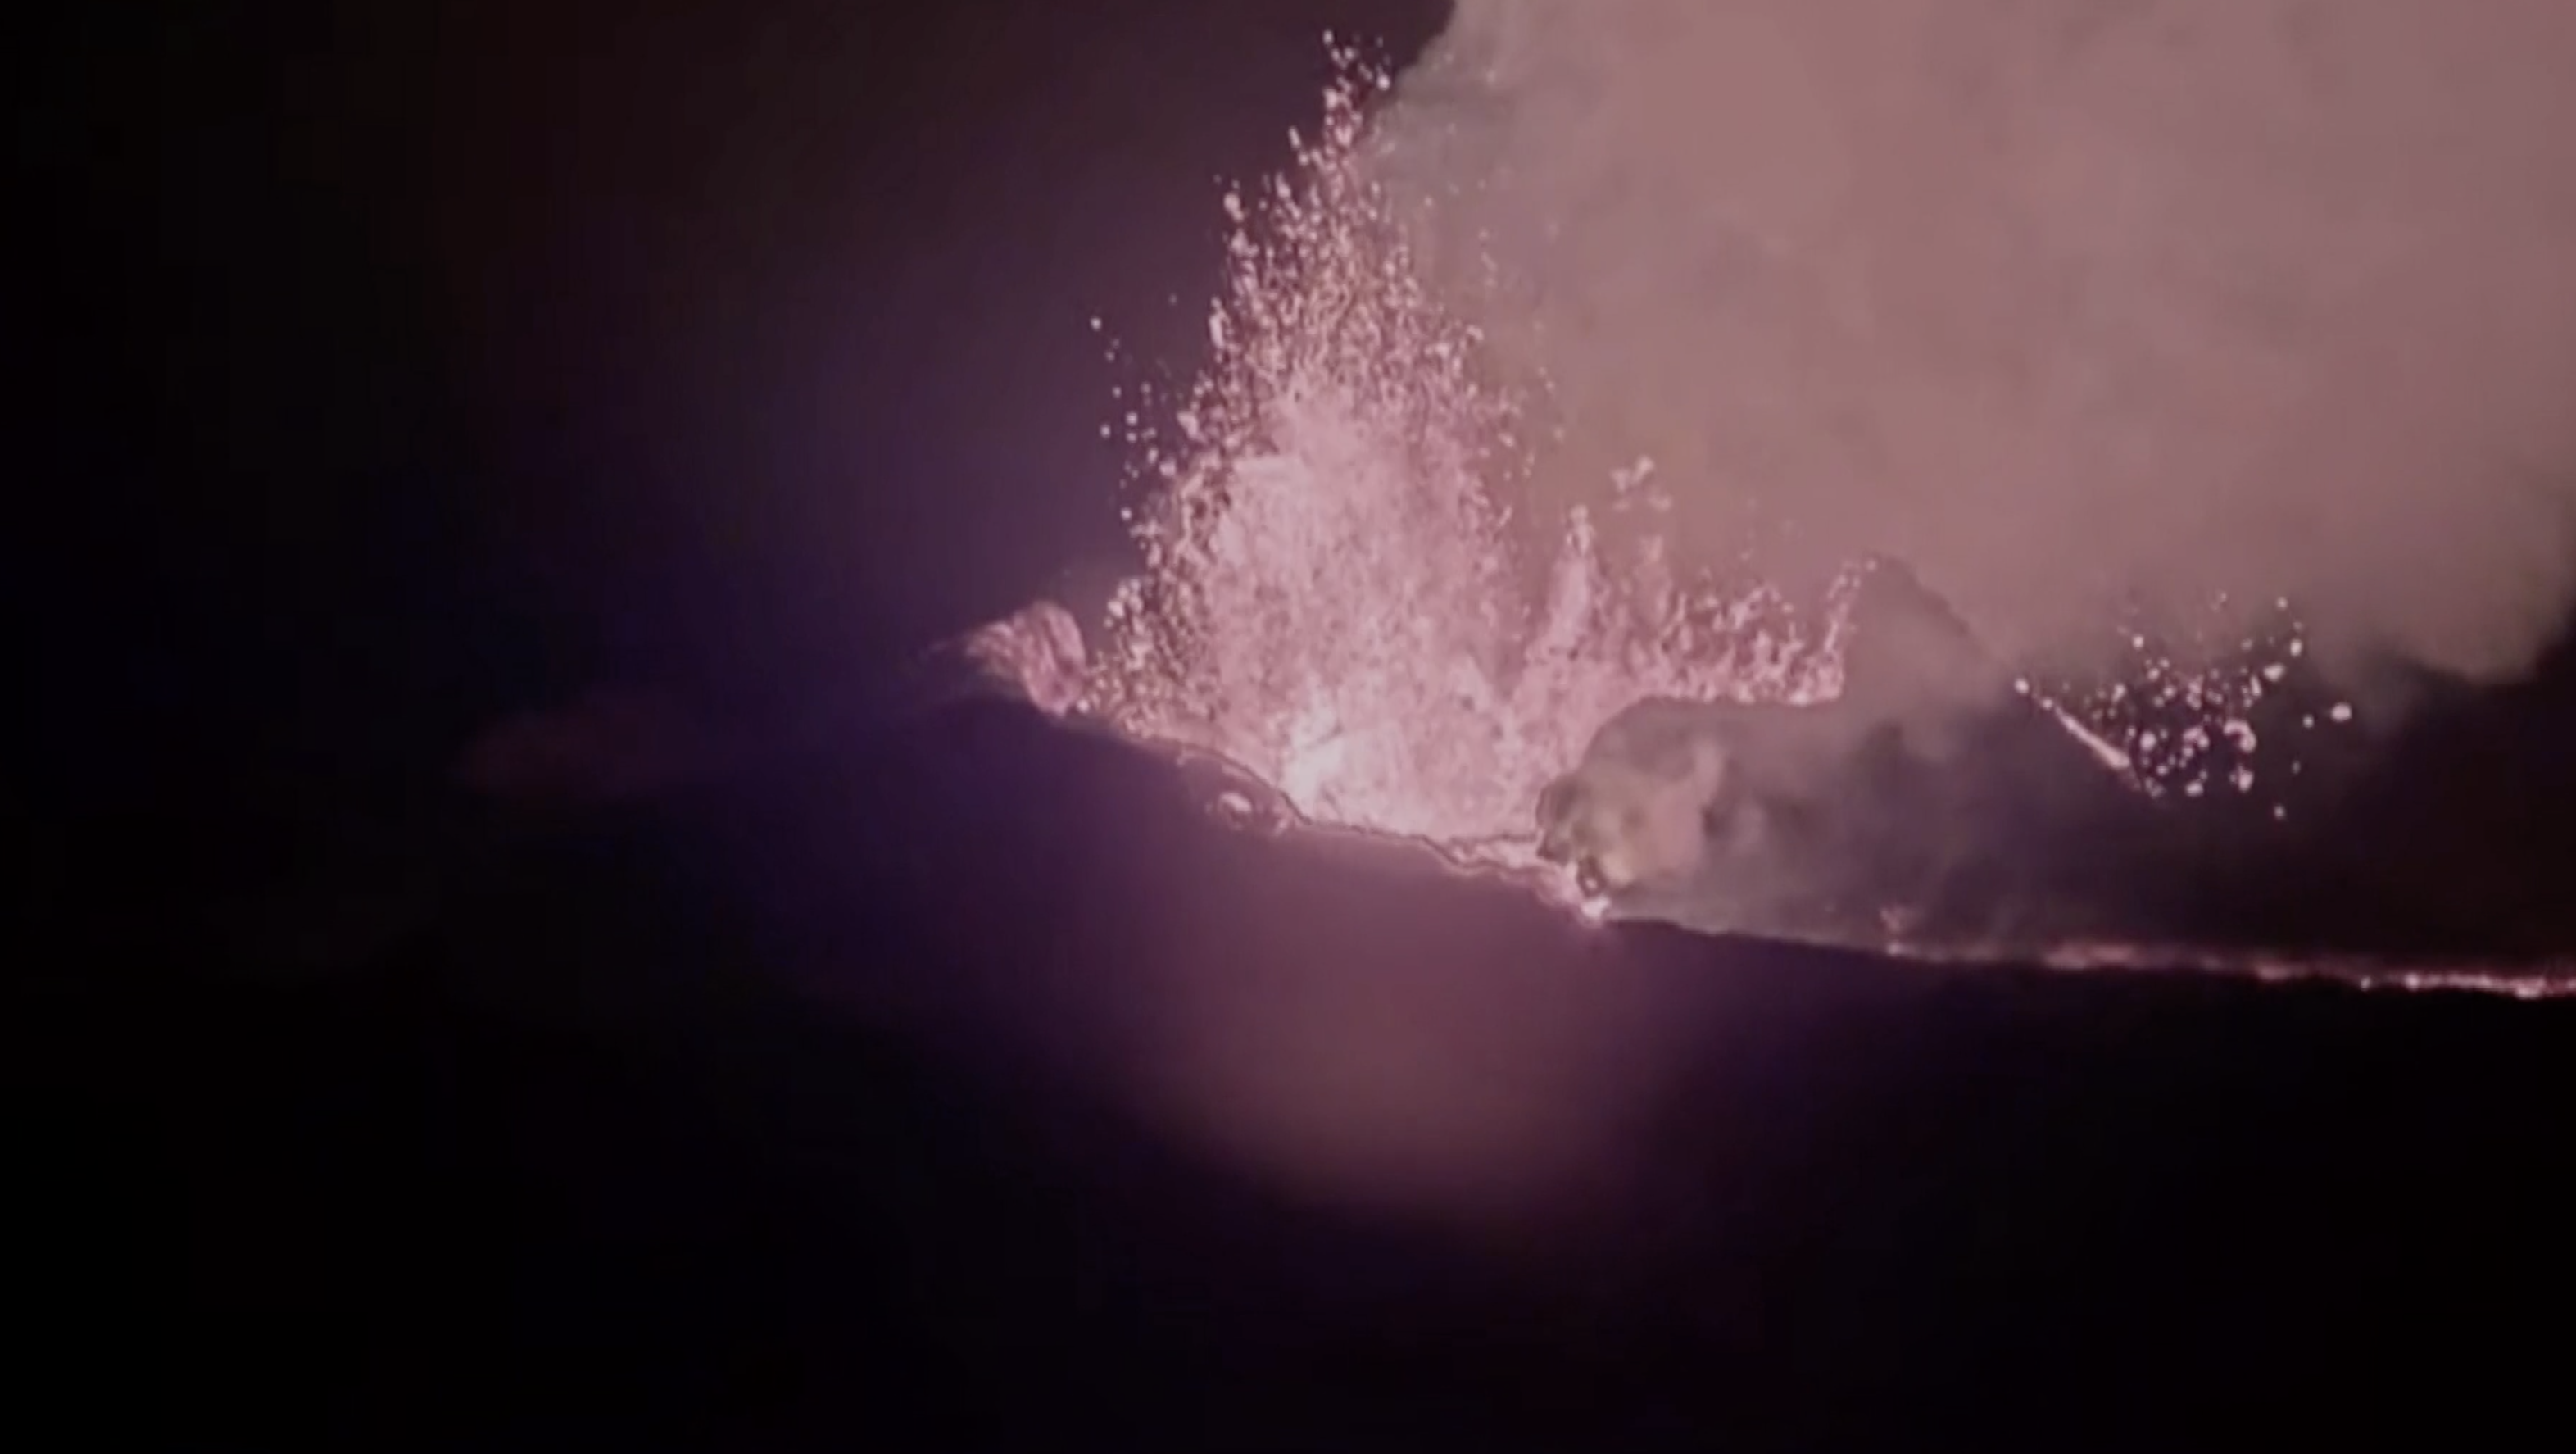 Live video shows Hawaii's Mauna Loa volcano erupting